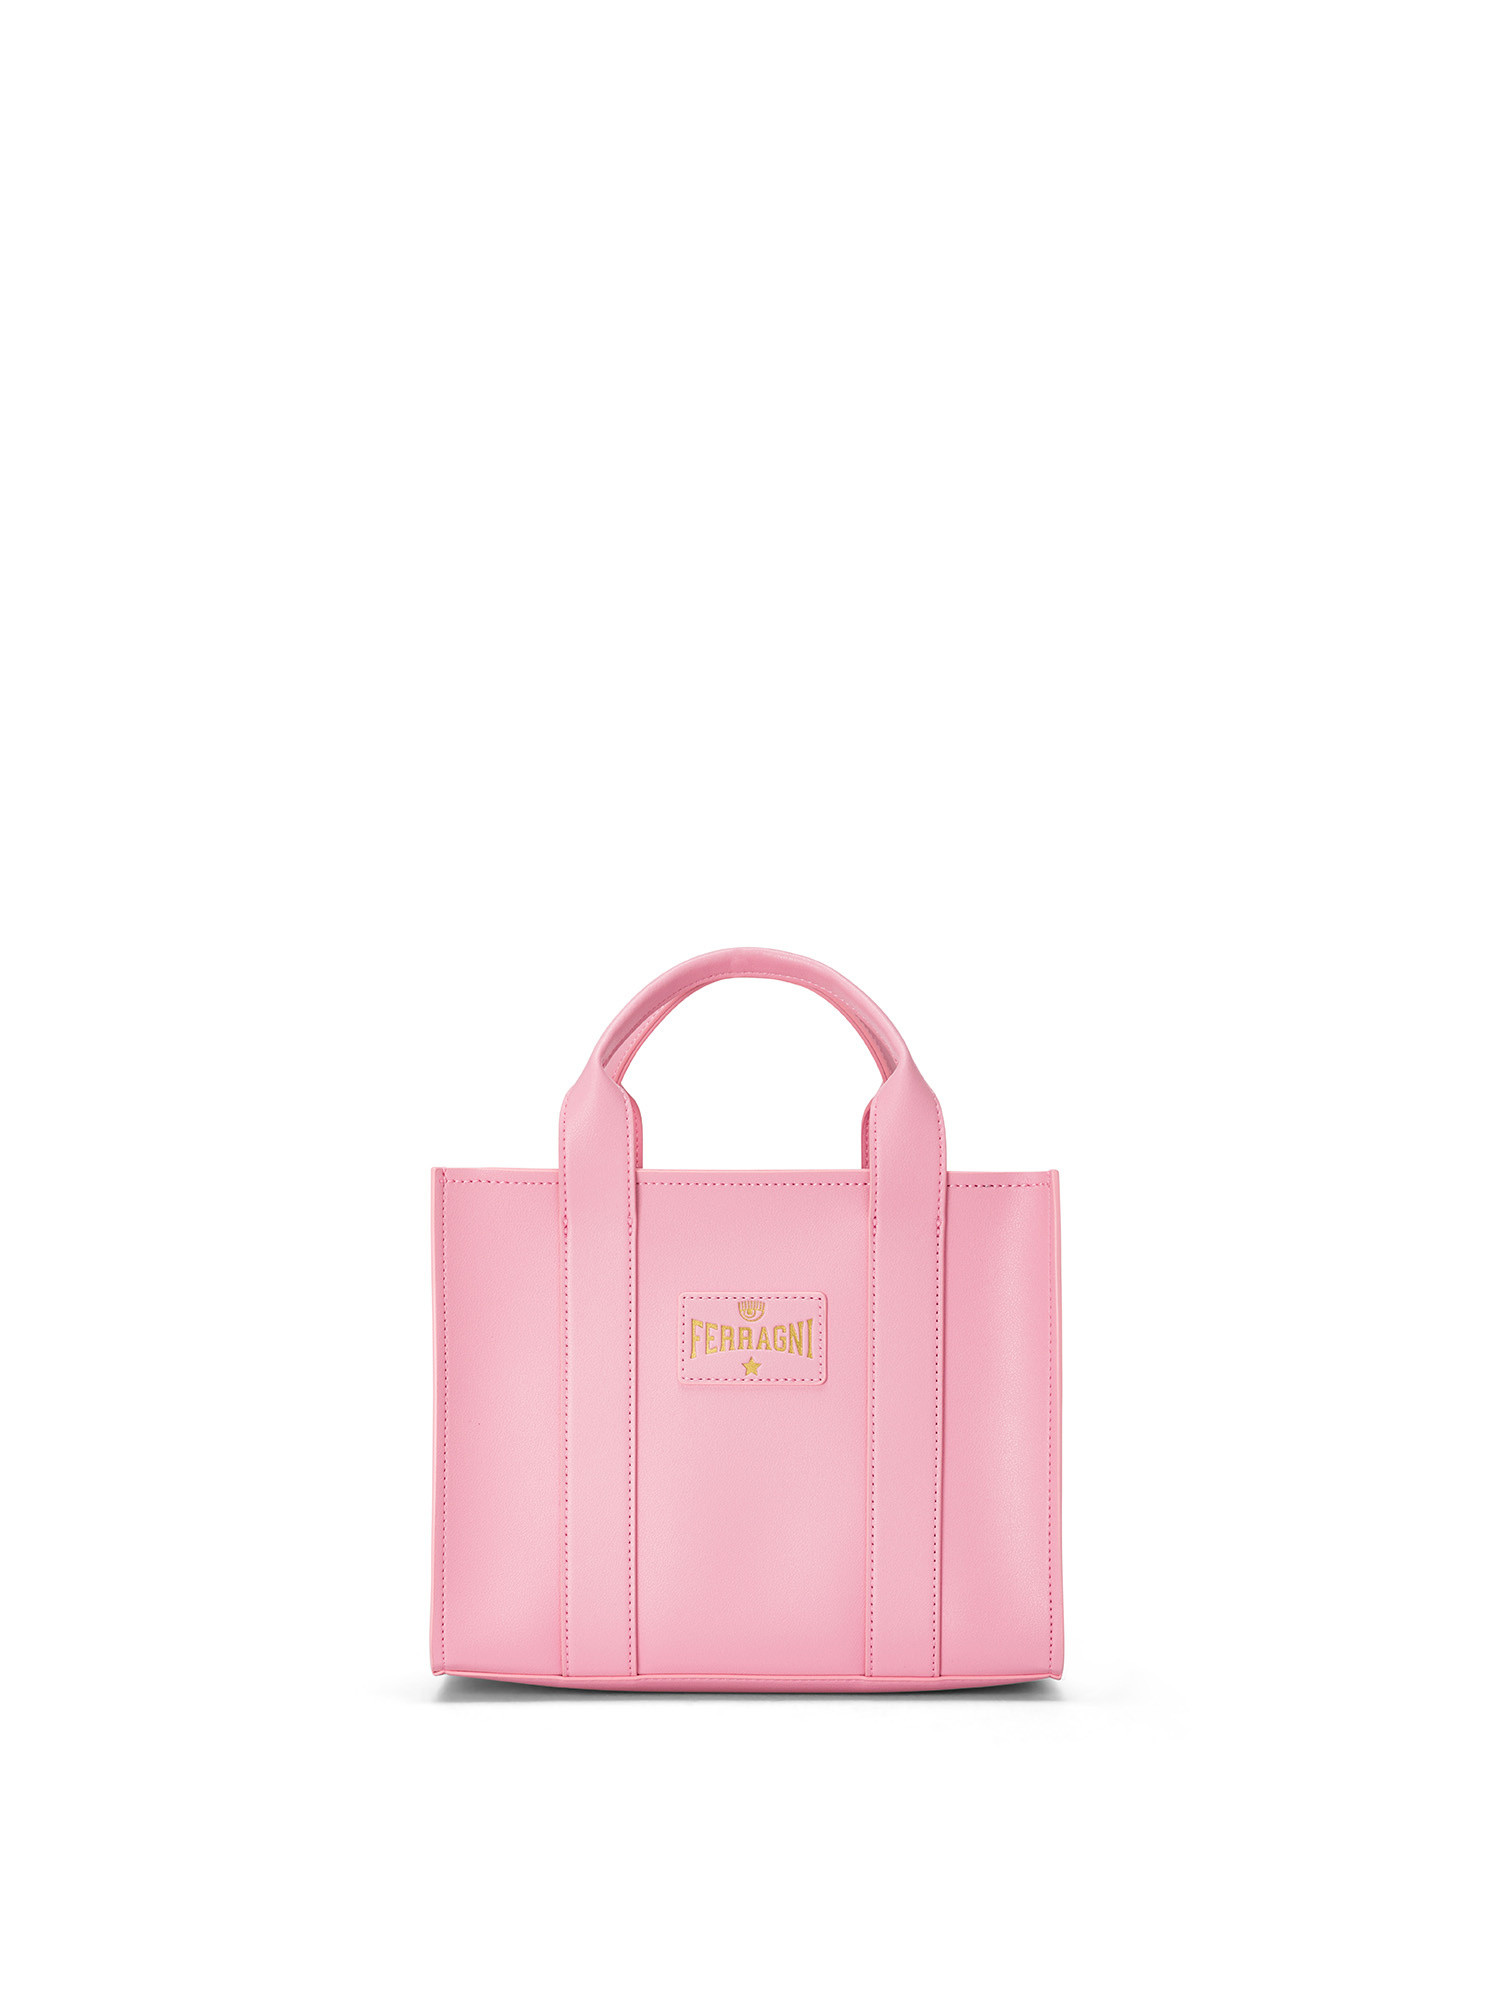 Chiara Ferragni - Range N stretch shopping bag, Light Pink, large image number 0